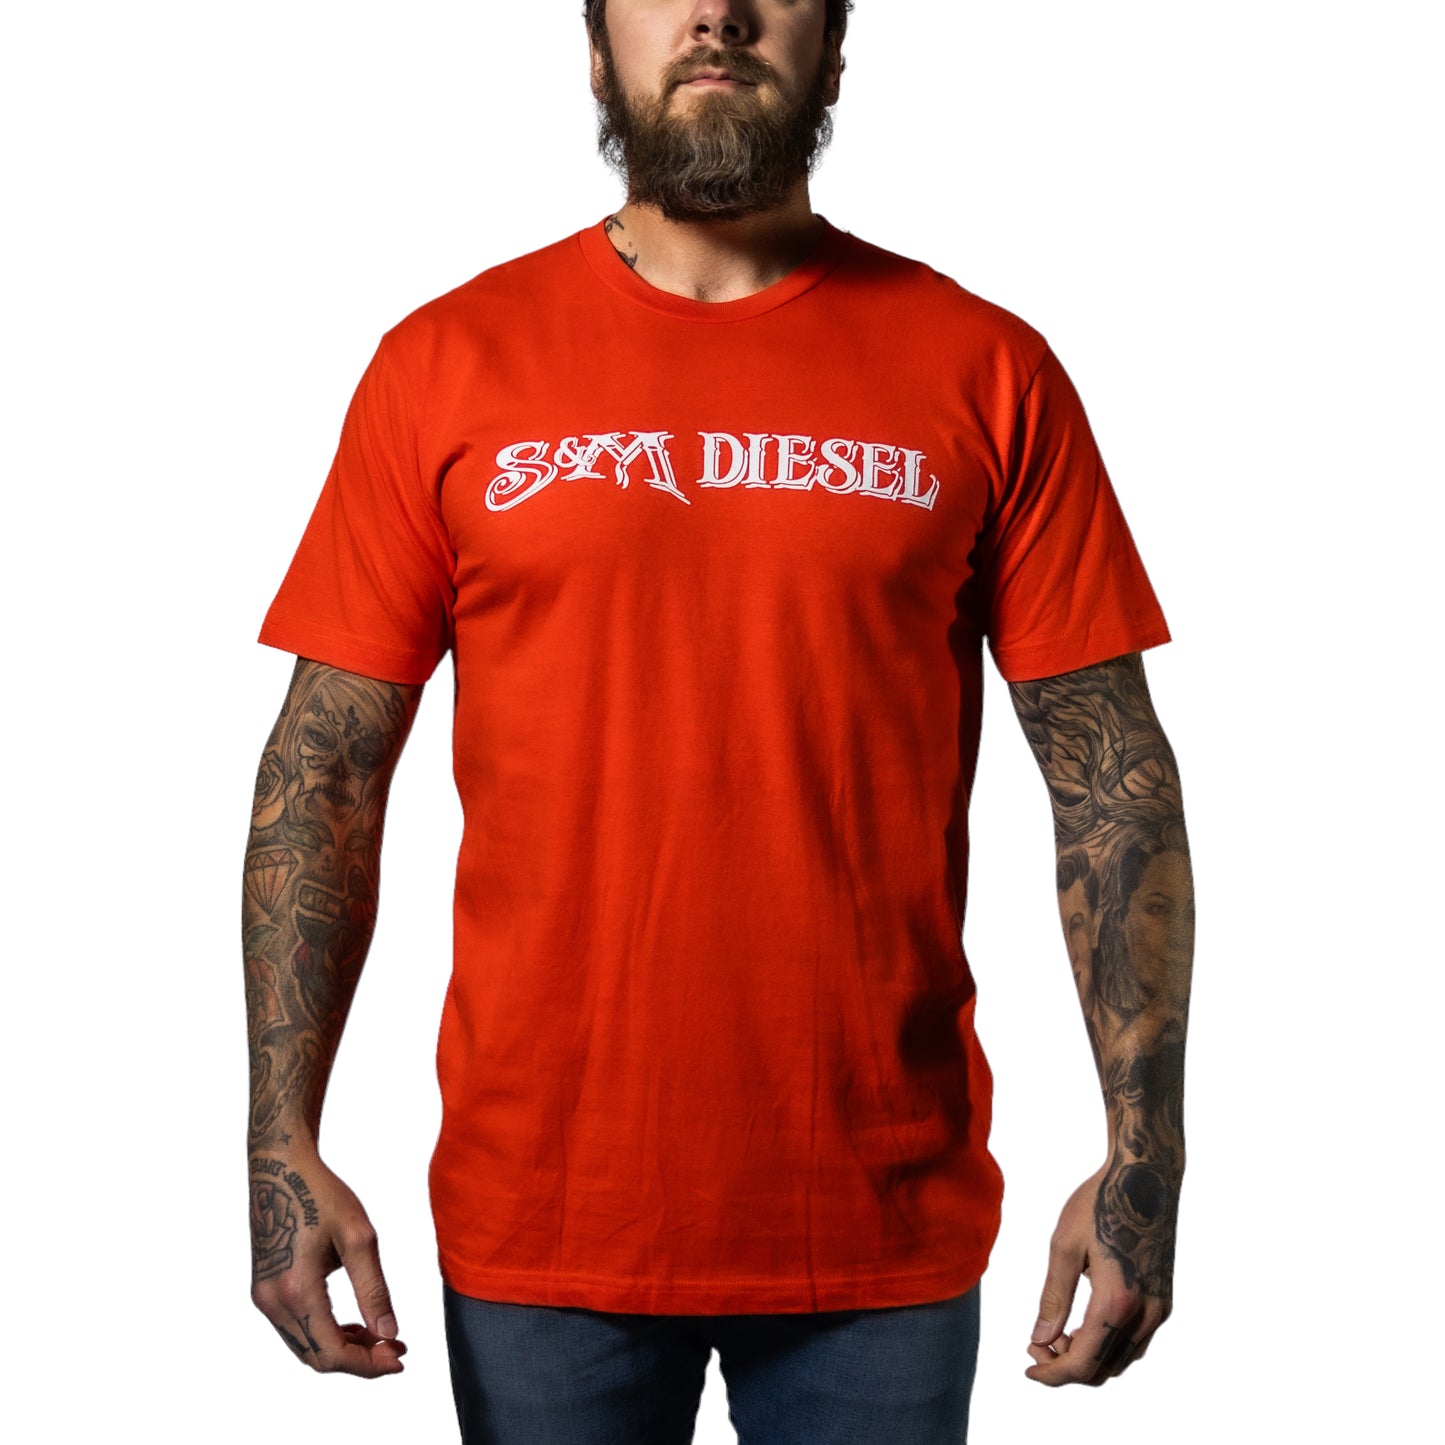 S&M Diesel short sleeve uni-sex t-shirt white logo- 10 color options avail